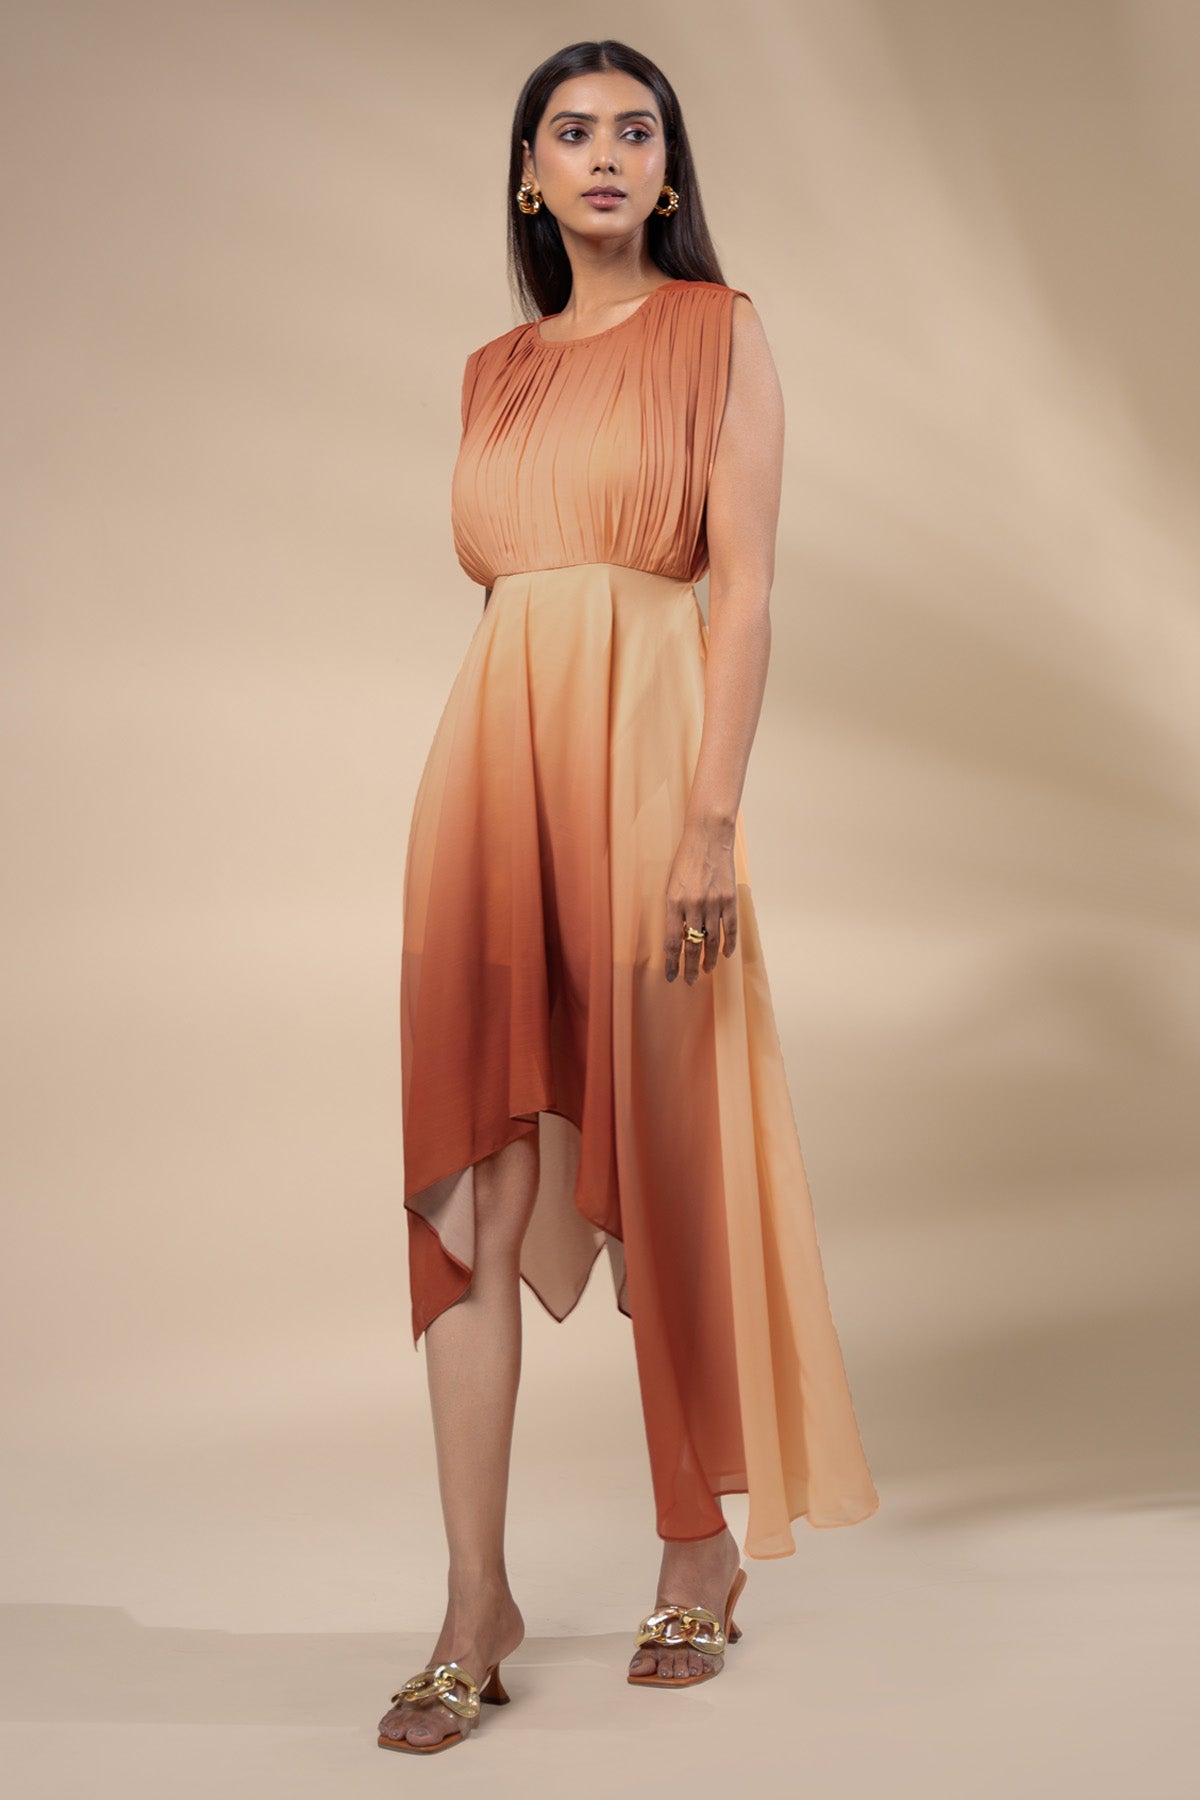 The Decem Ally Orange Chiffon Asymmetric Dress for Women online available at scrollnshops